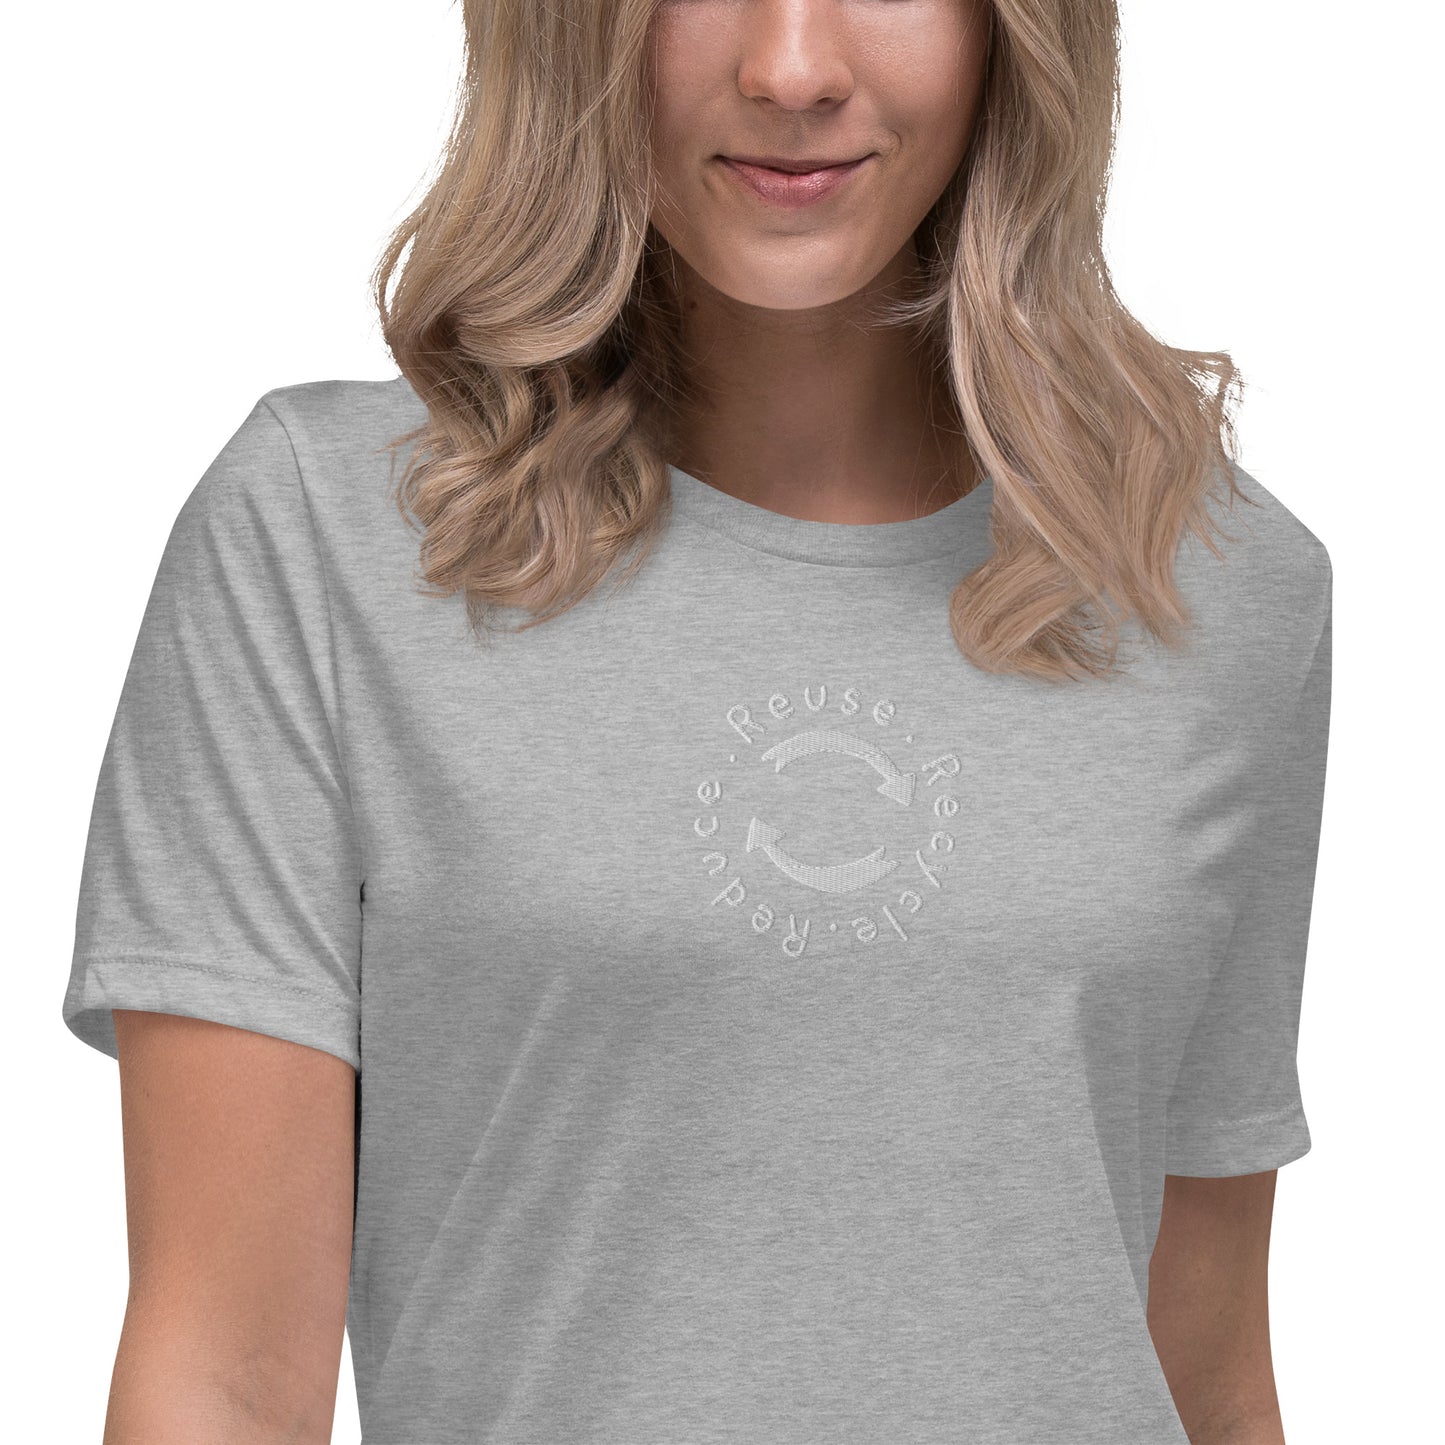 Camiseta suelta mujer